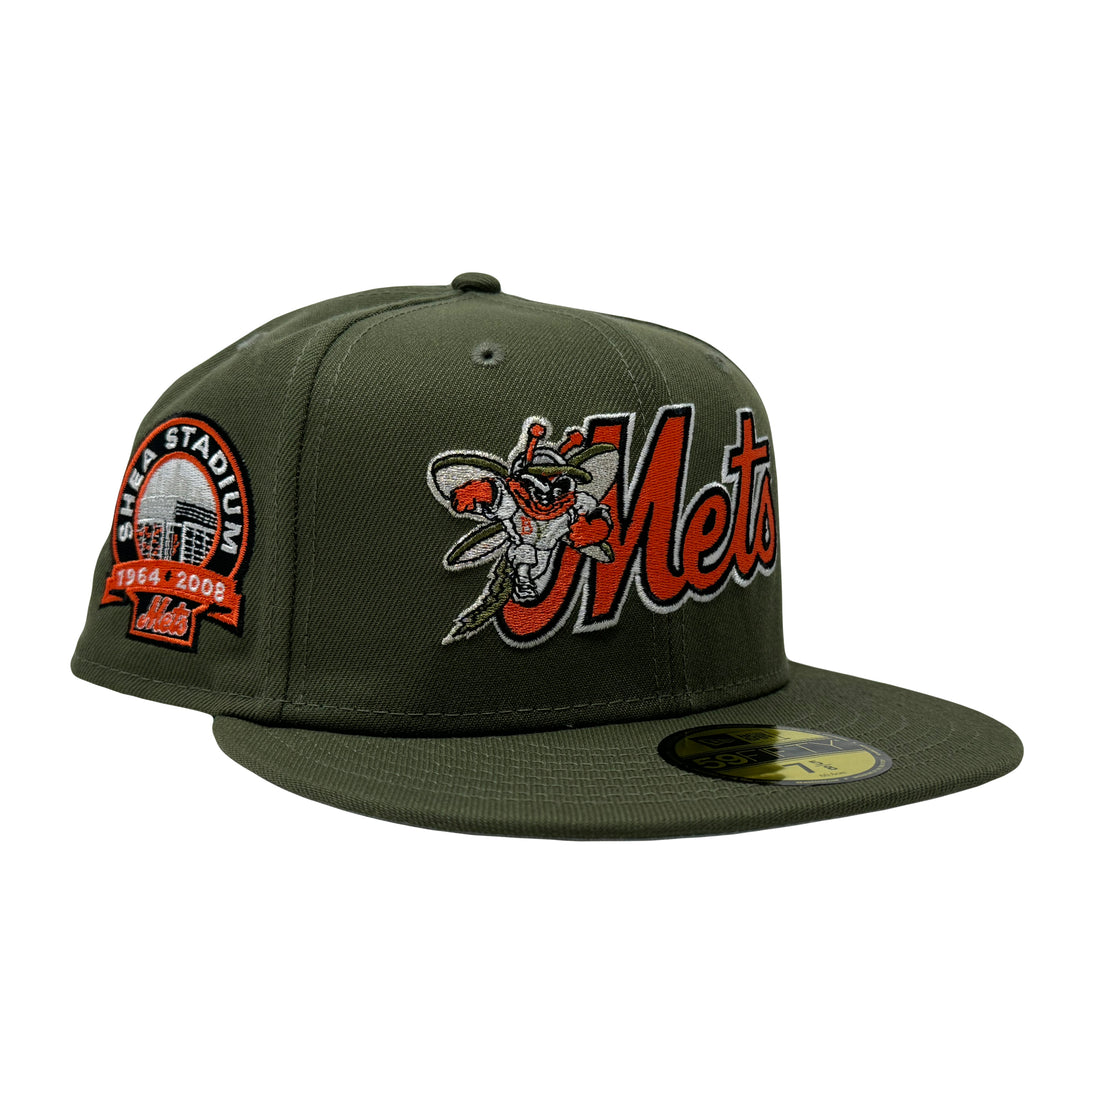 Binghamton Mets Shea Stadium 5950 New Era Fitted Hat